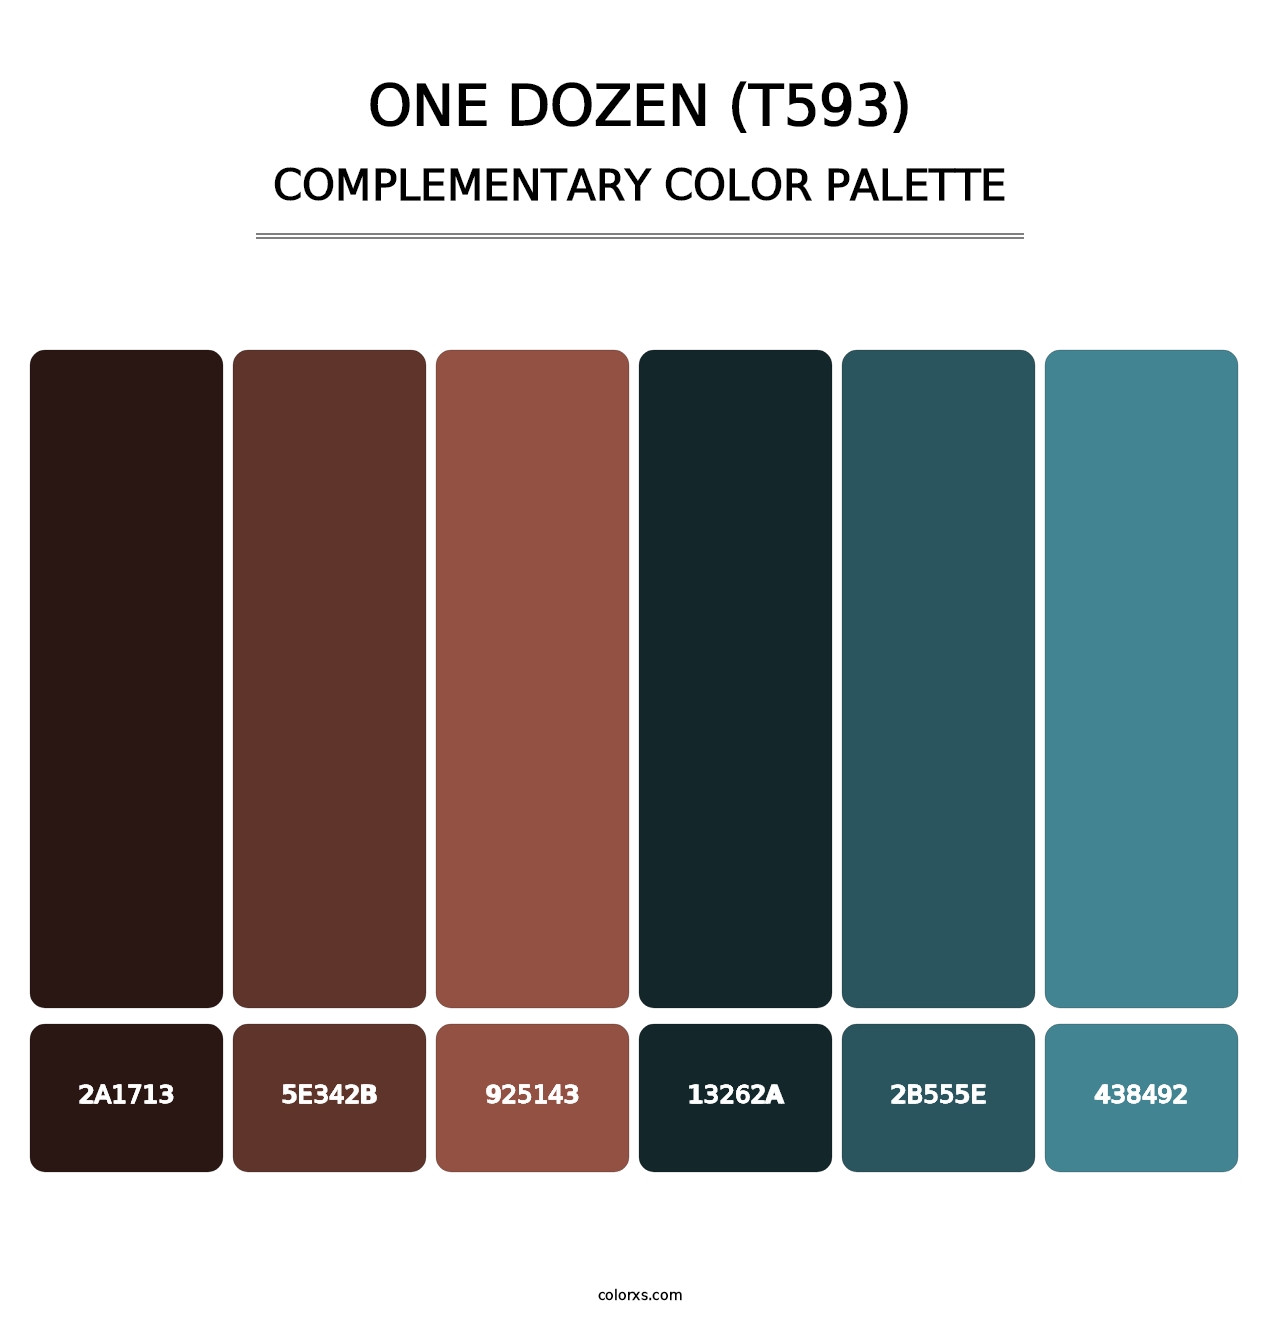 One Dozen (T593) - Complementary Color Palette